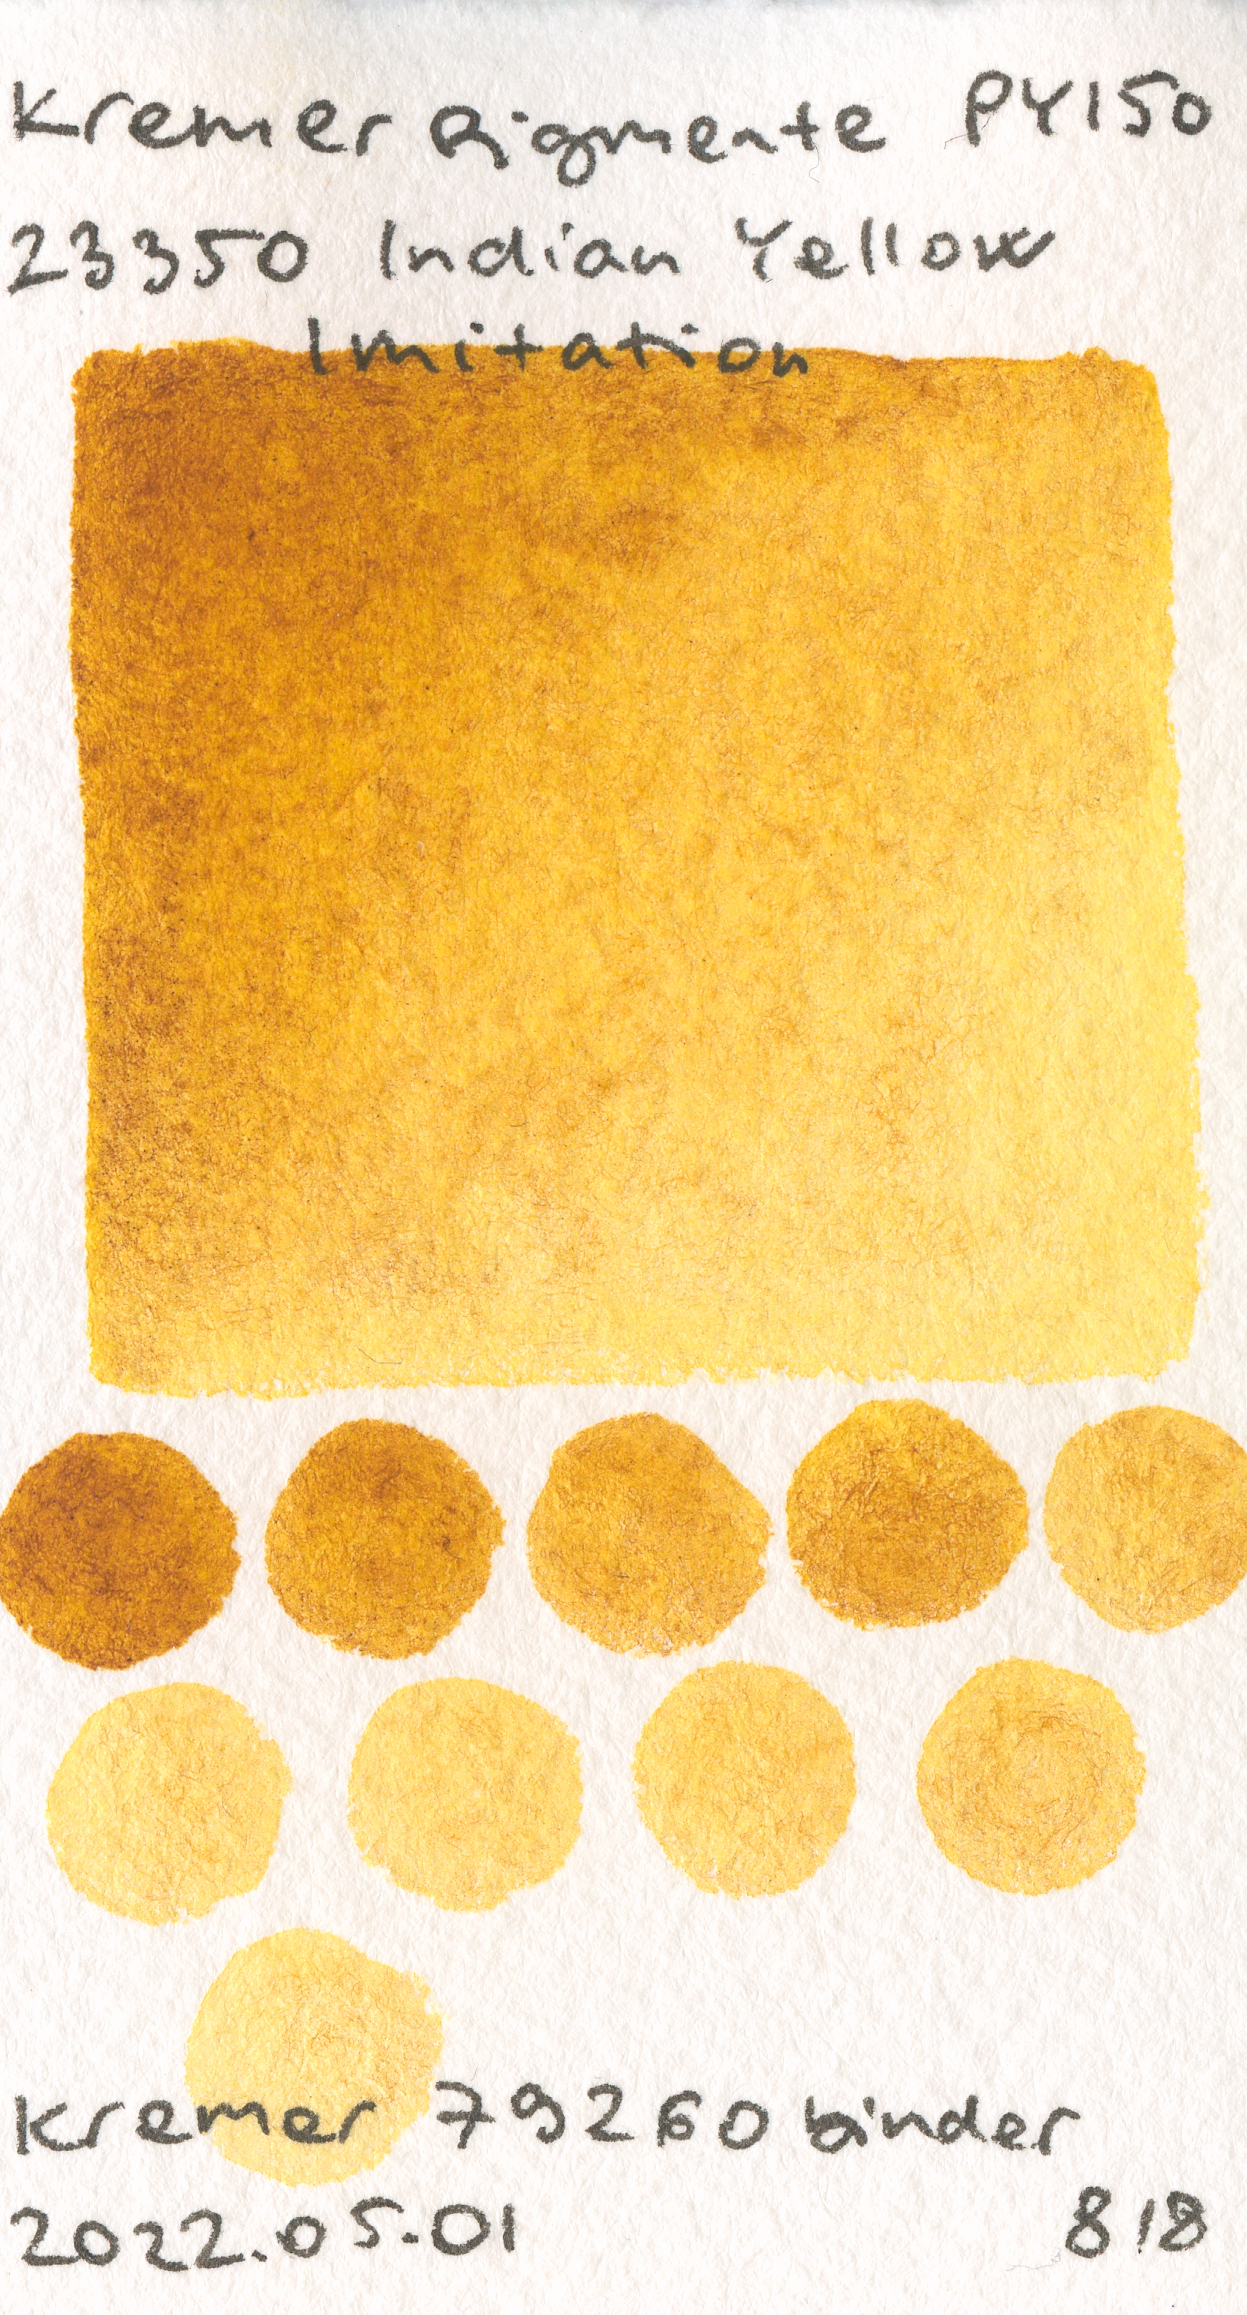 Kremer Pigmente Pigment 23350 Indian Yellow Imitation PY150 watercolor swatch